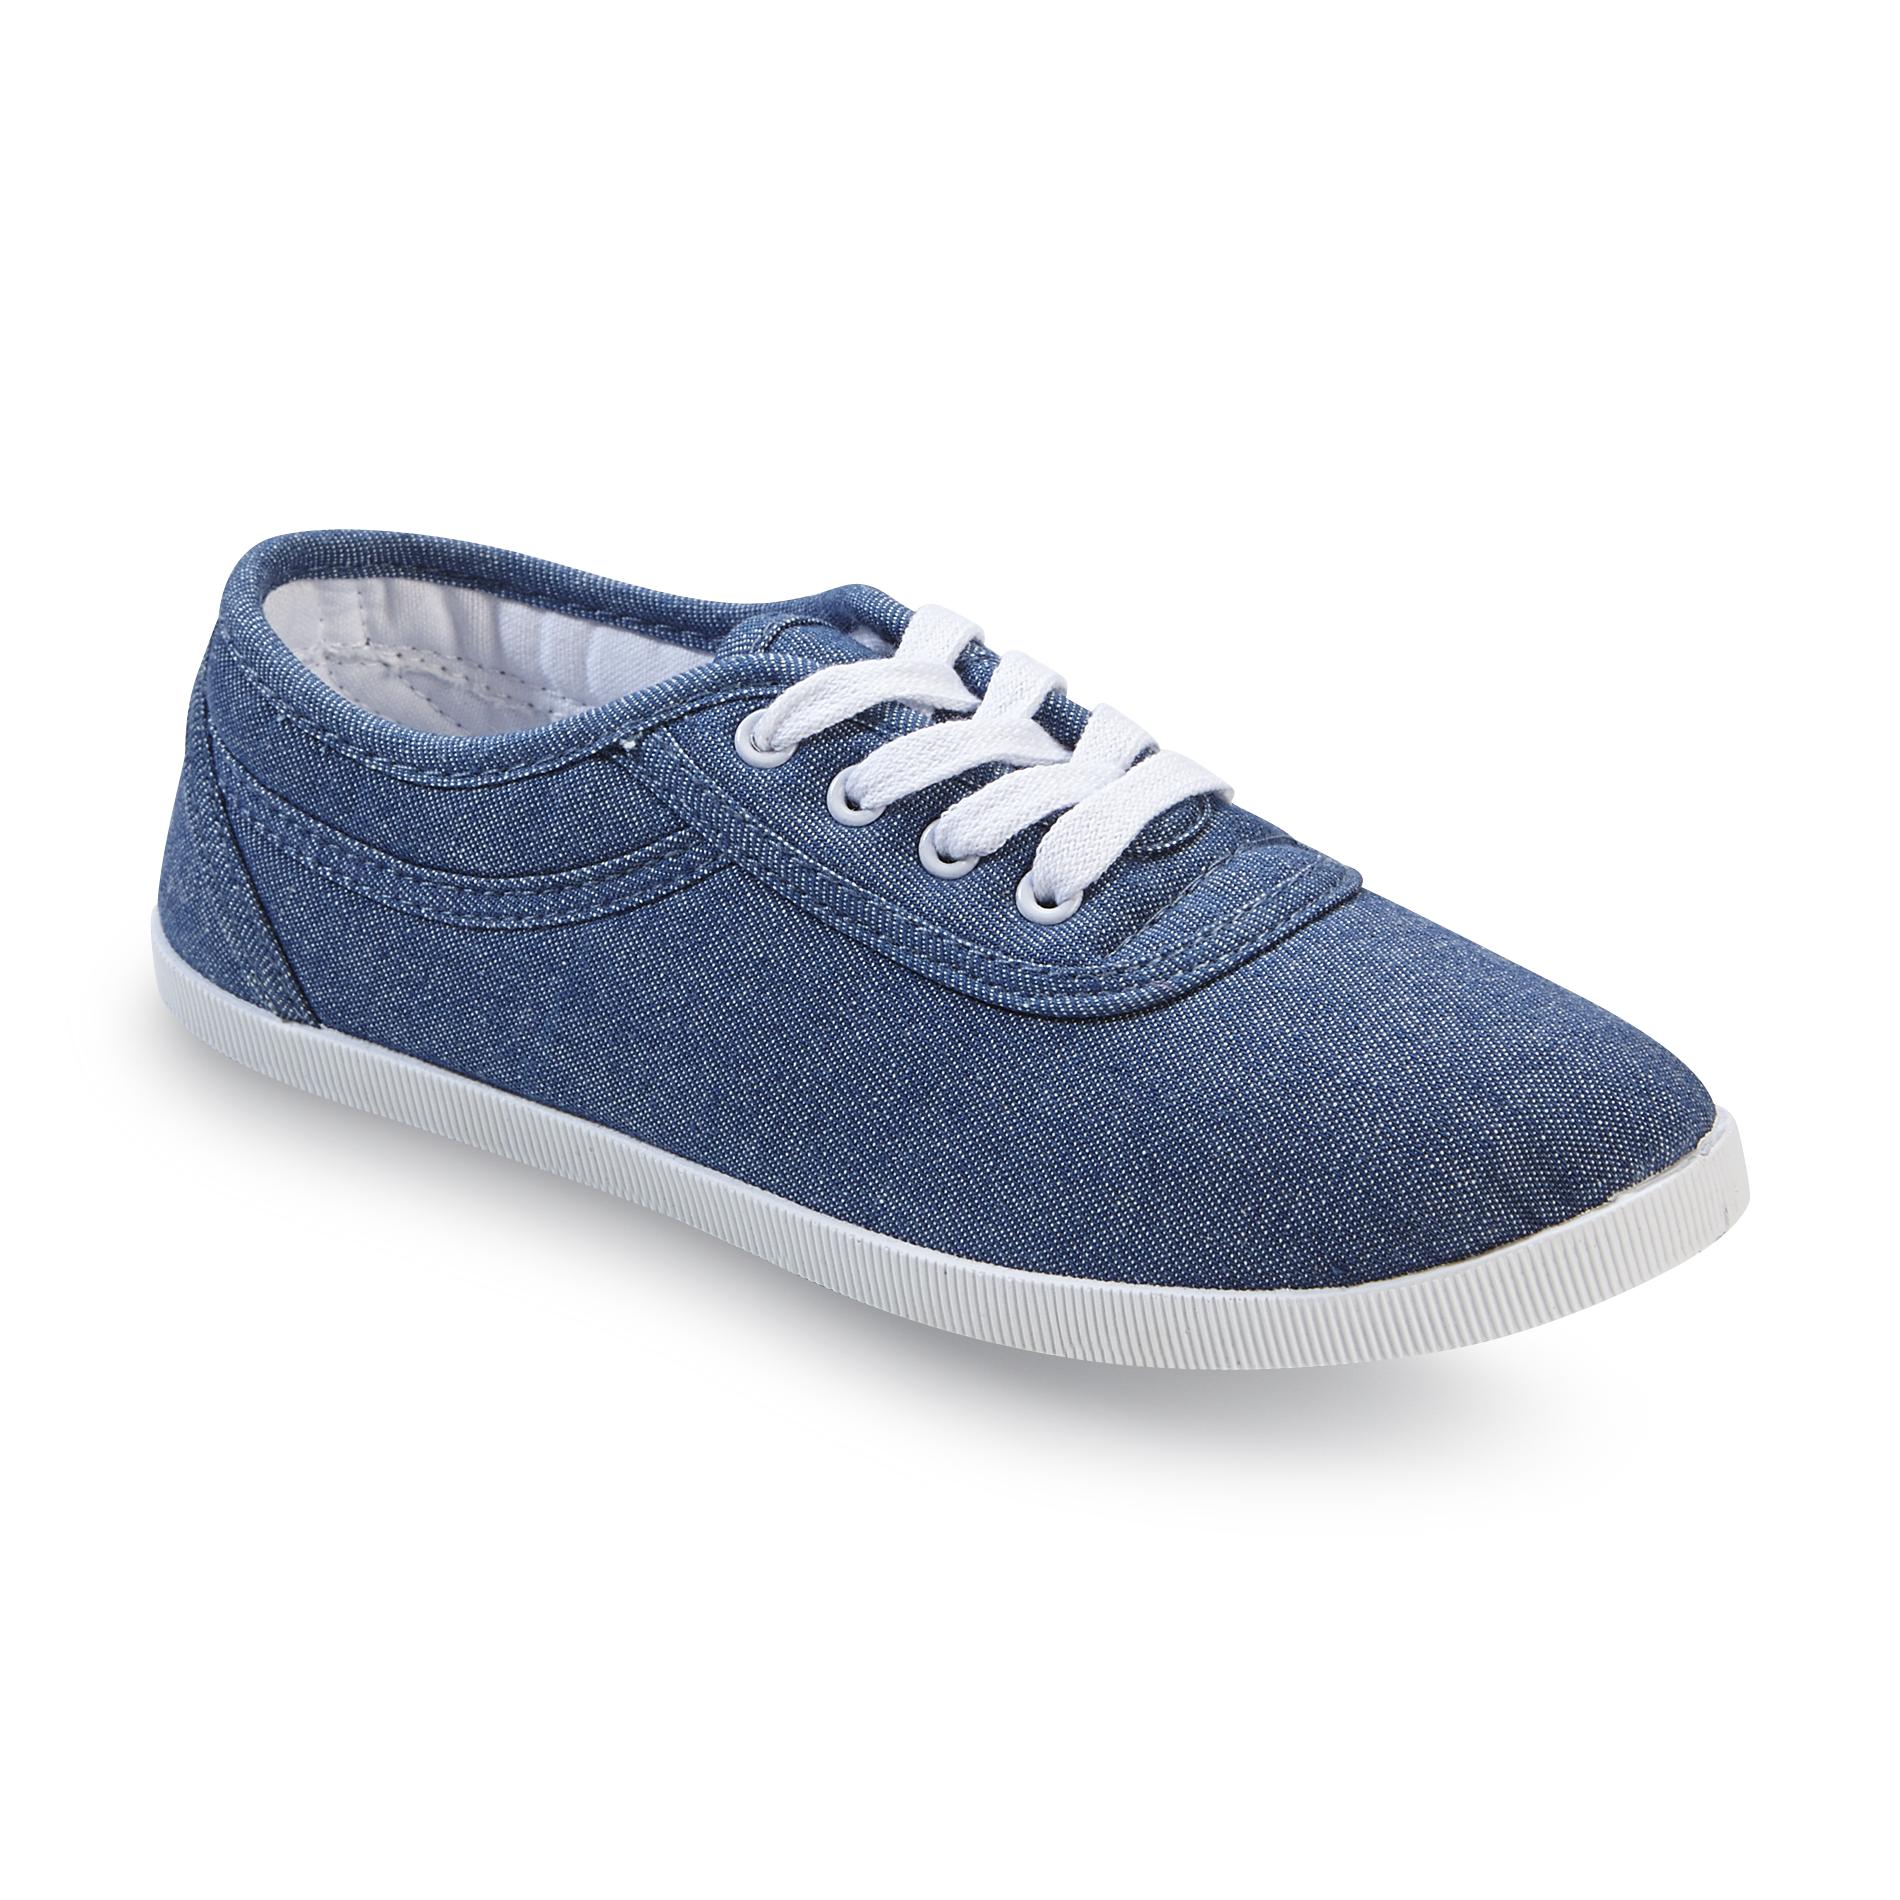 Basic Editions Women's Eavan Blue Casual Shoe